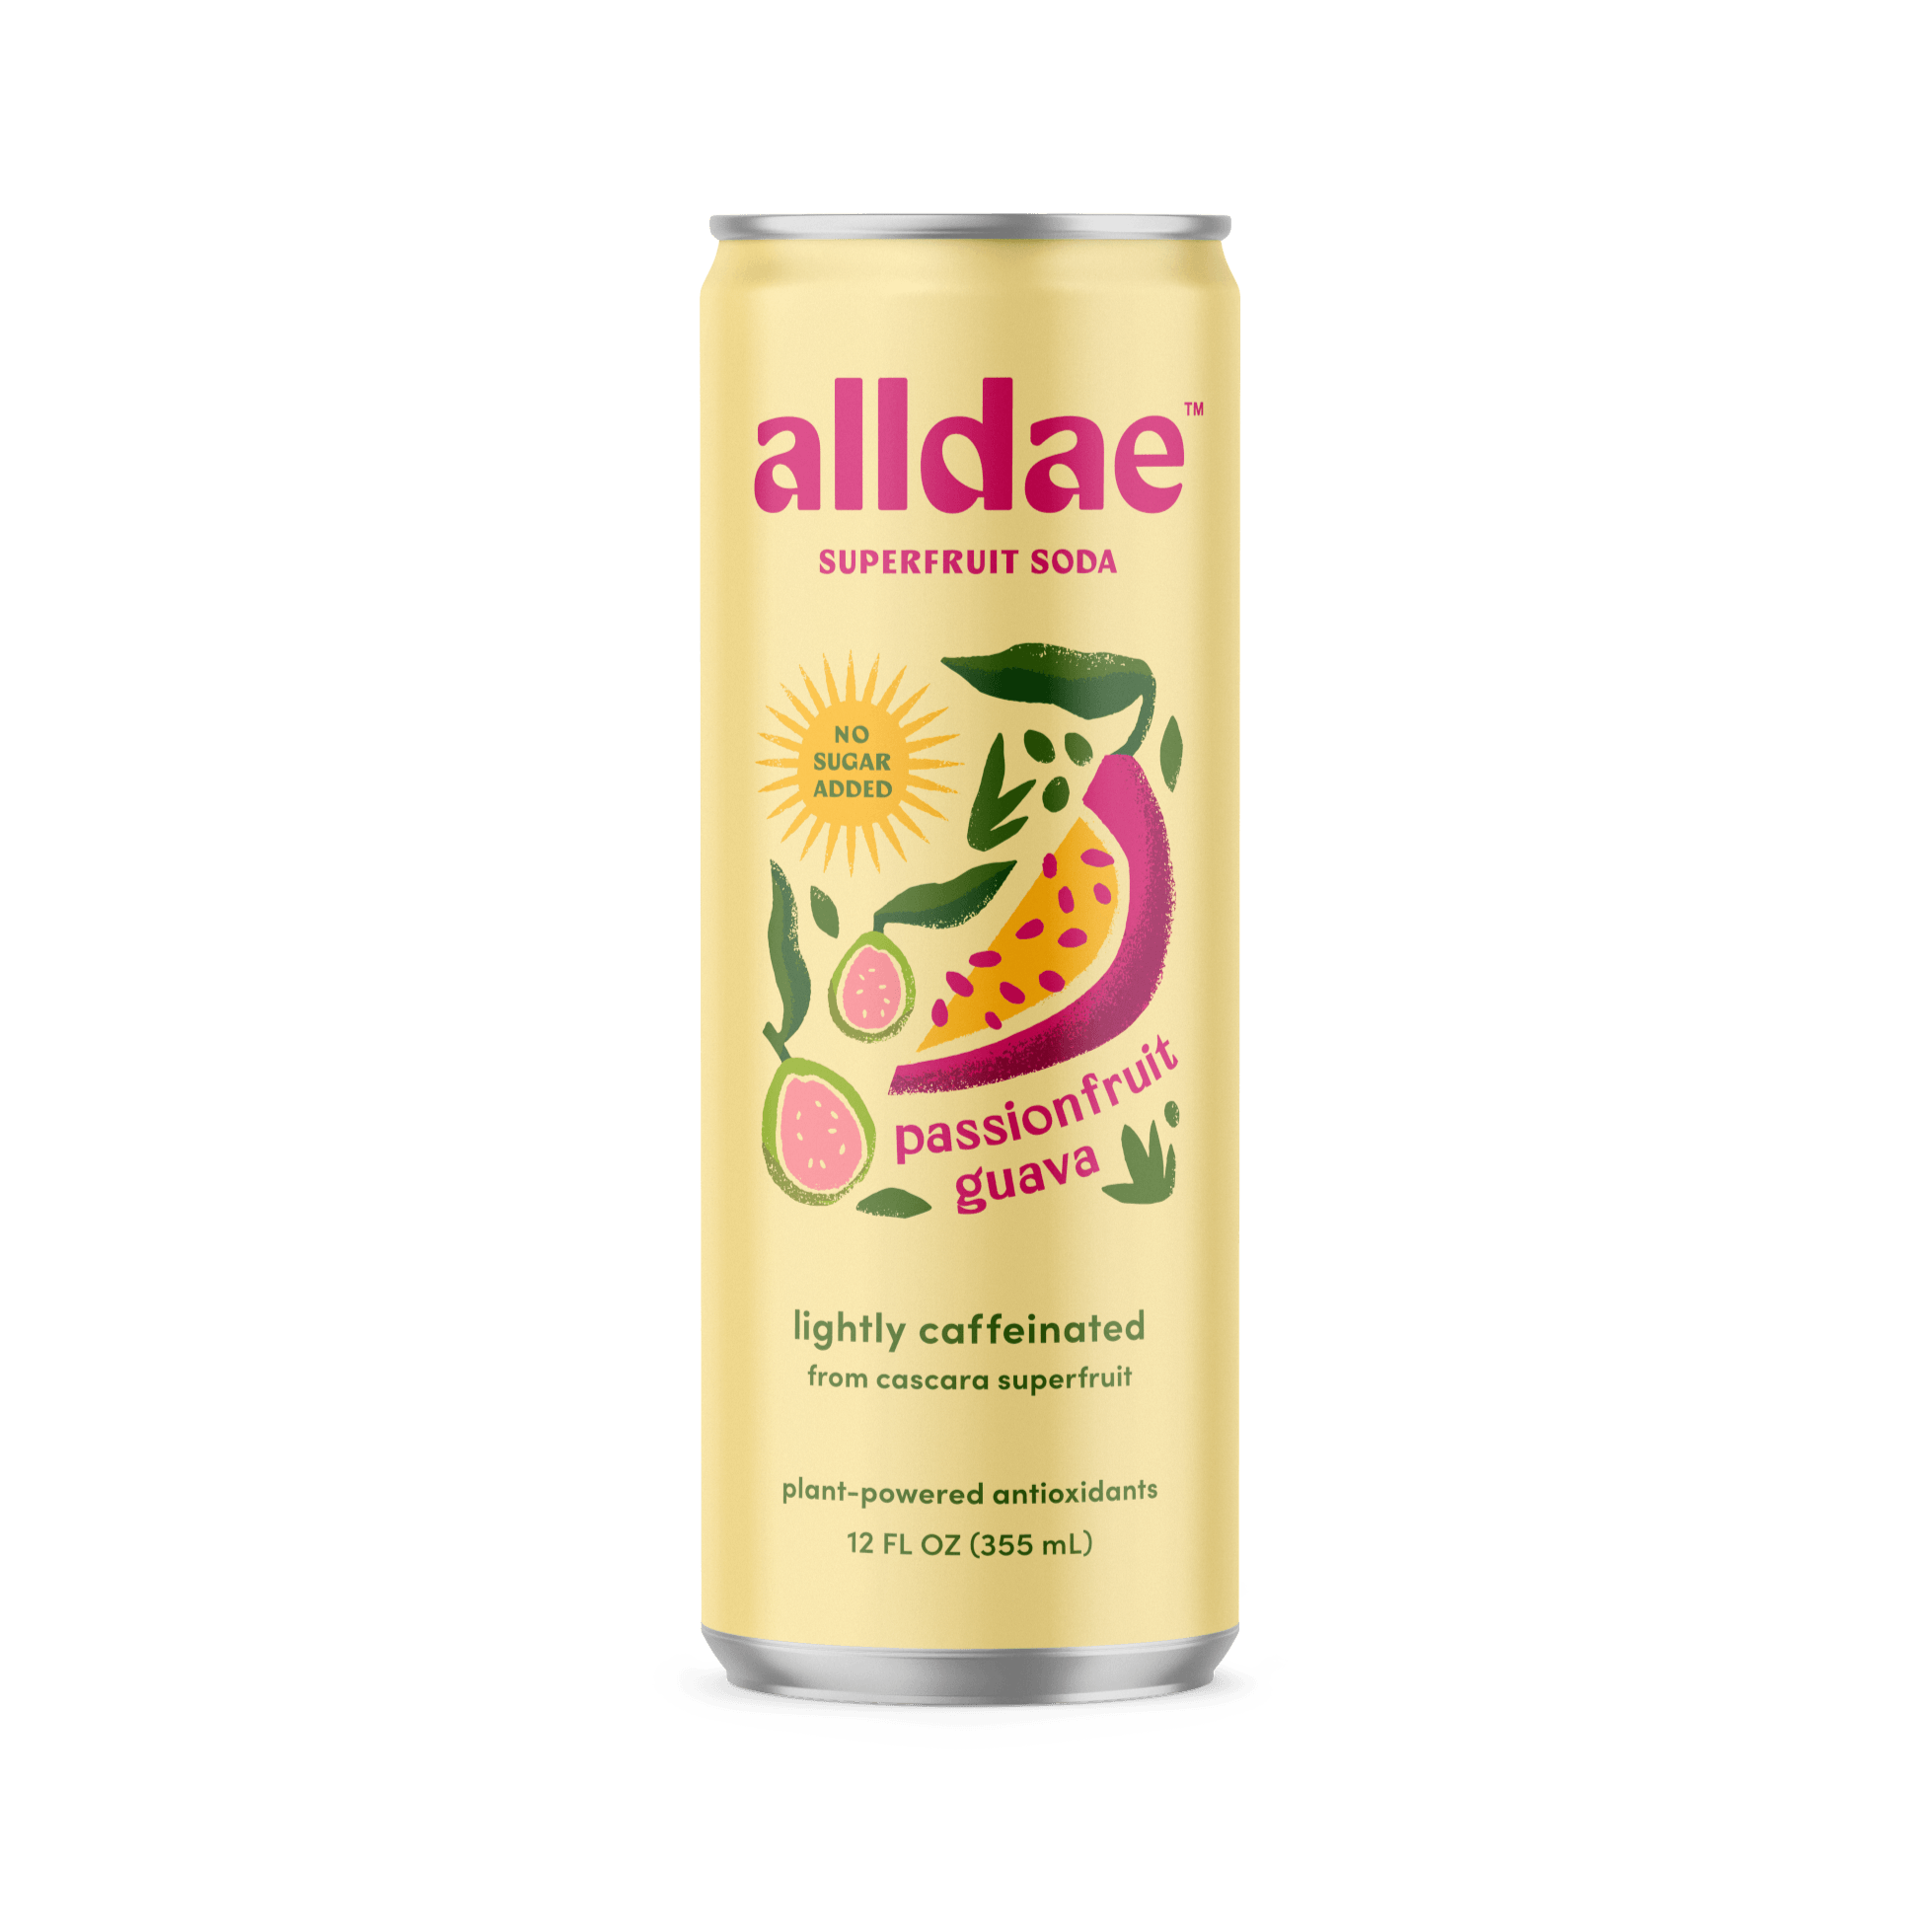 alldae superfruit soda